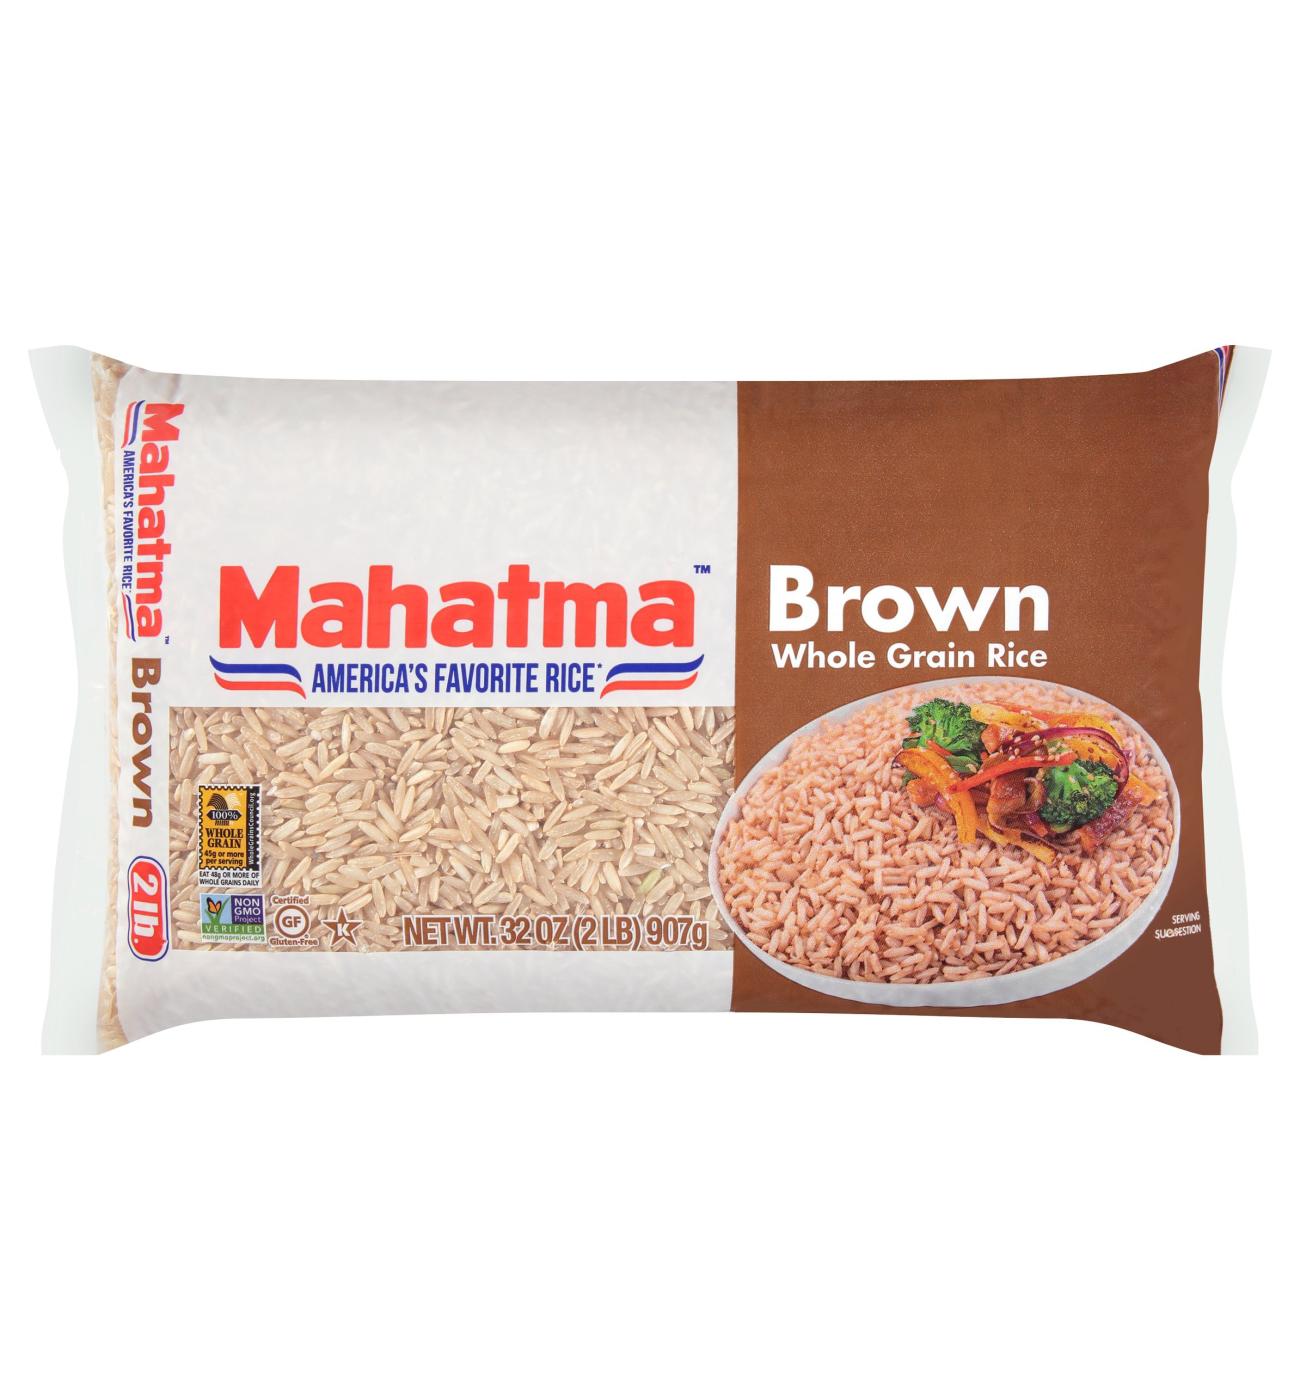 Mahatma Brown Whole Grain Rice; image 1 of 6